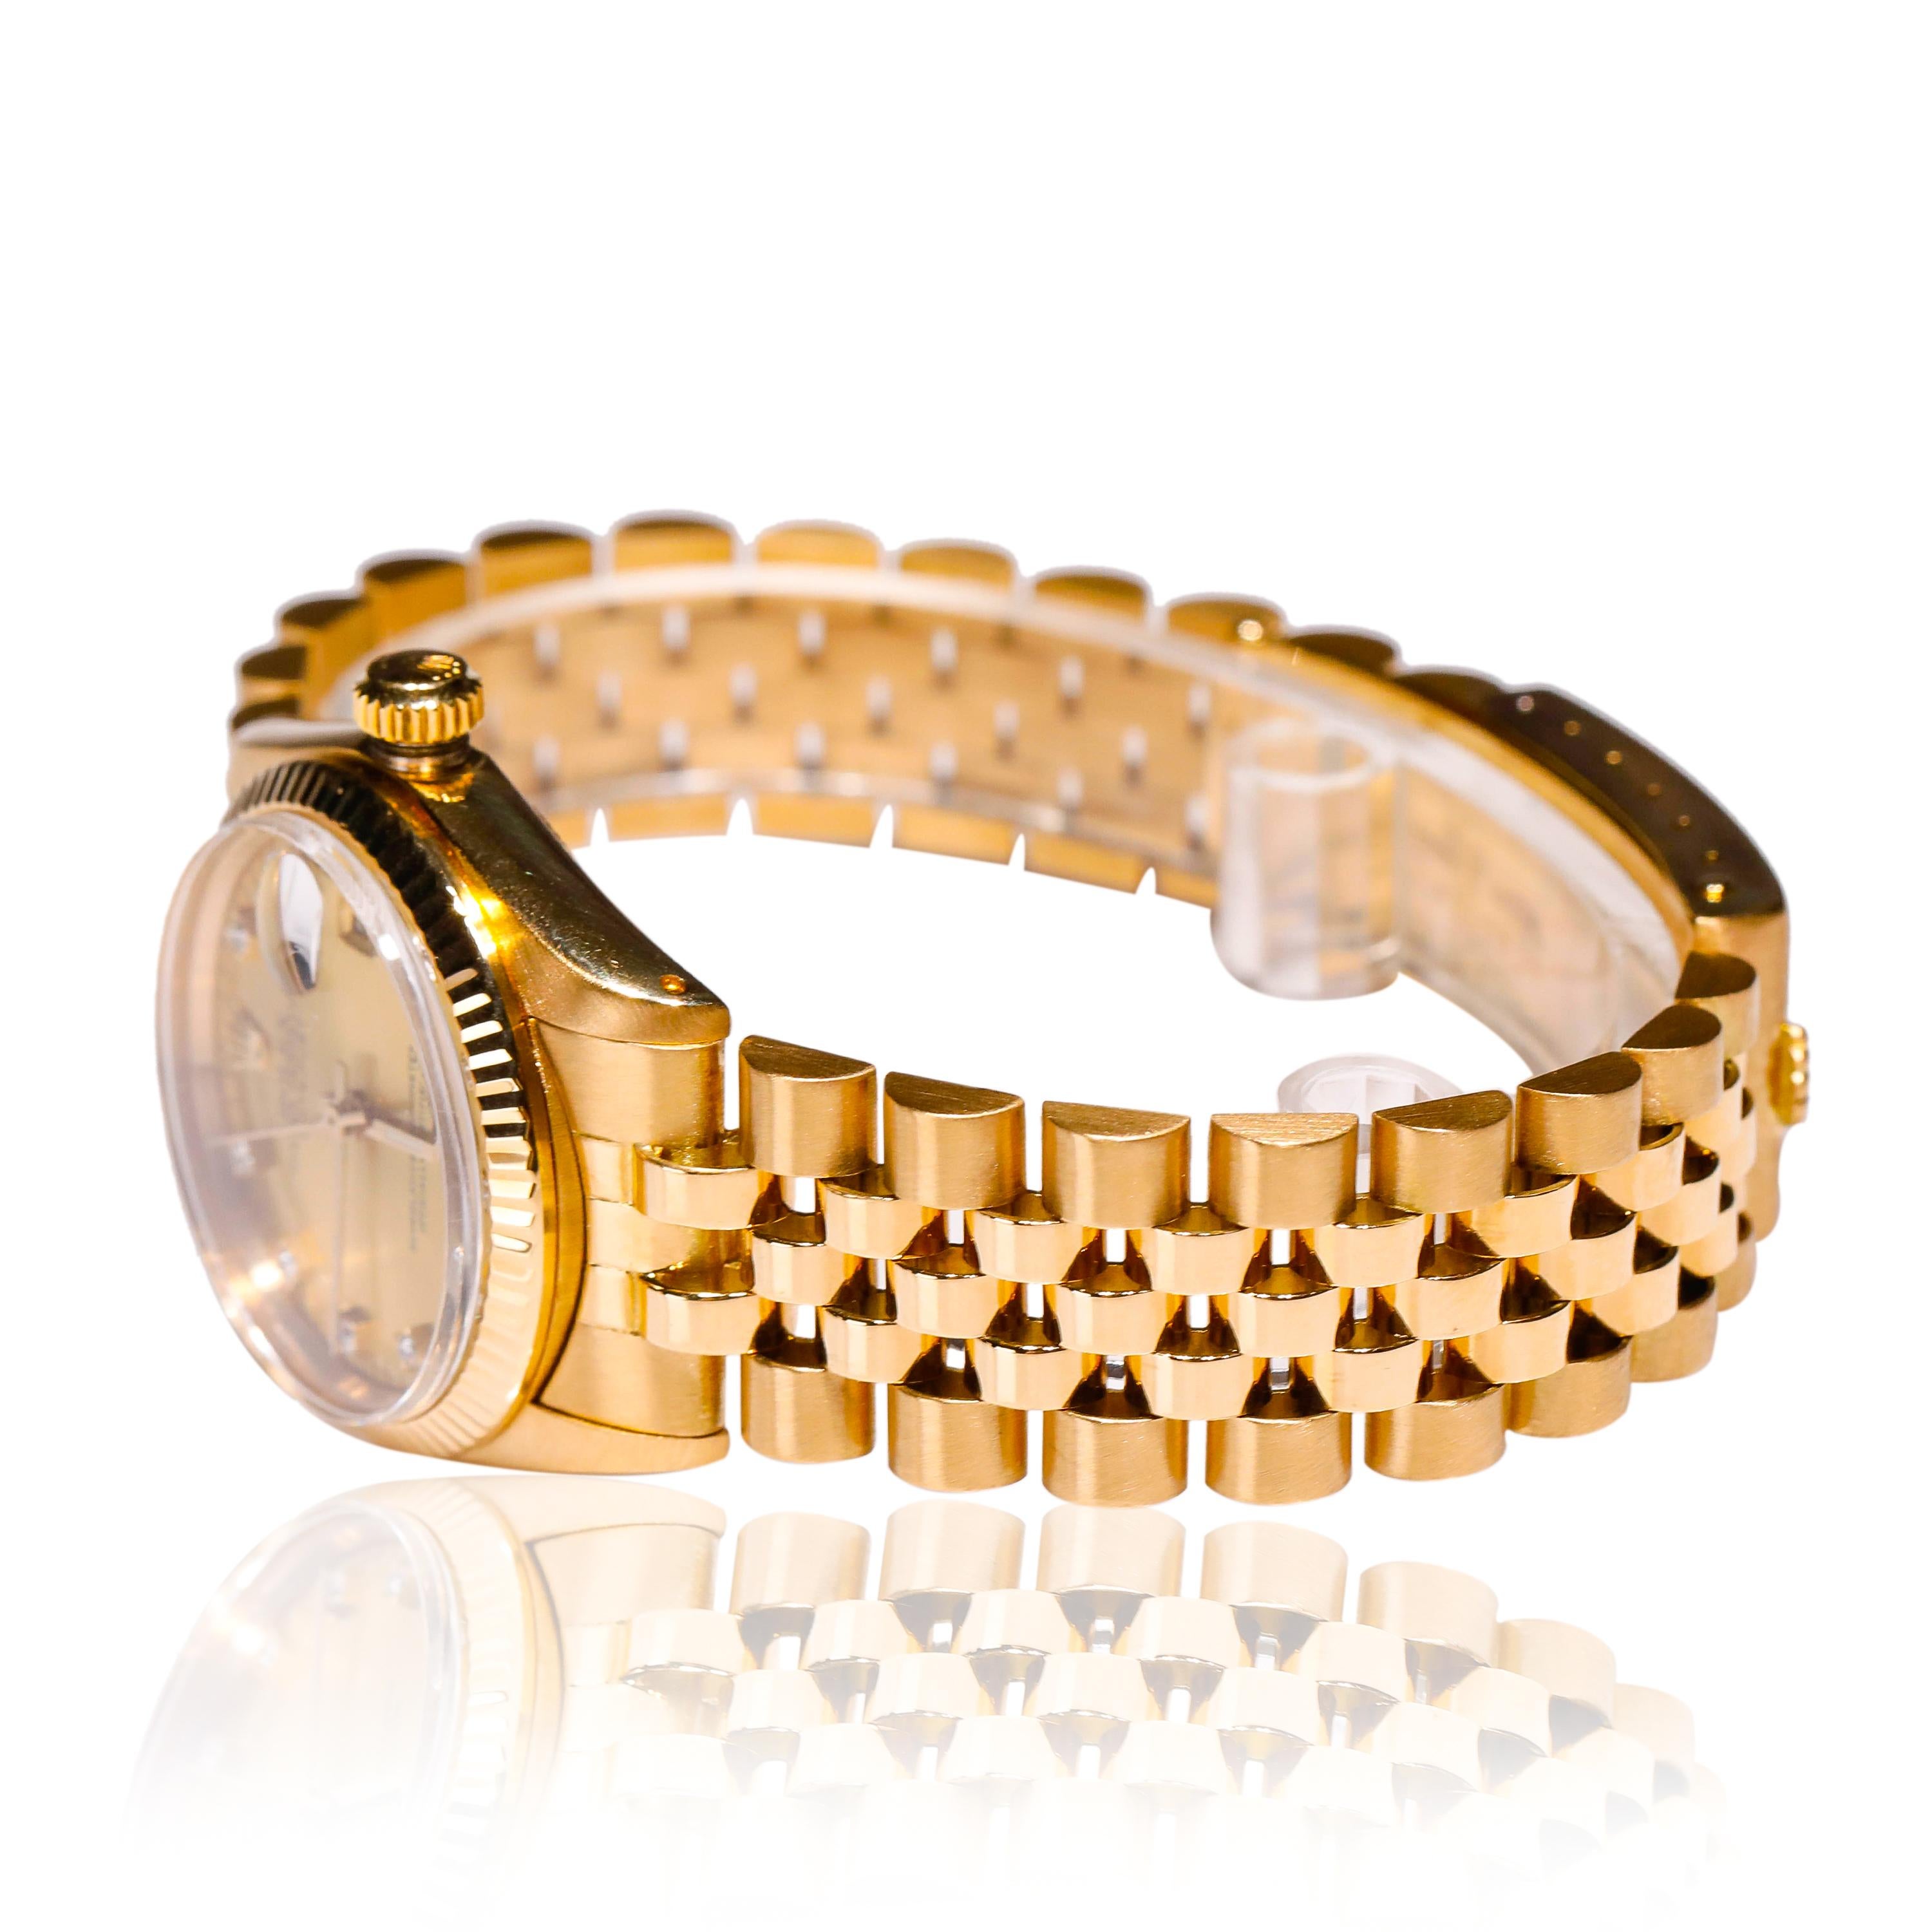 Rolex Datejust 18k Yellow Gold Champaign Diamond Dial Jubilee Bracelet Watch

SKU: WA00036

PRIMARY DETAILS
Brand:  Rolex
Model: ROLEX 18k YELLOW GOLD DATEJUST
Country of Origin: Switzerland
Movement Type: Automatic
Year of Manufacture: